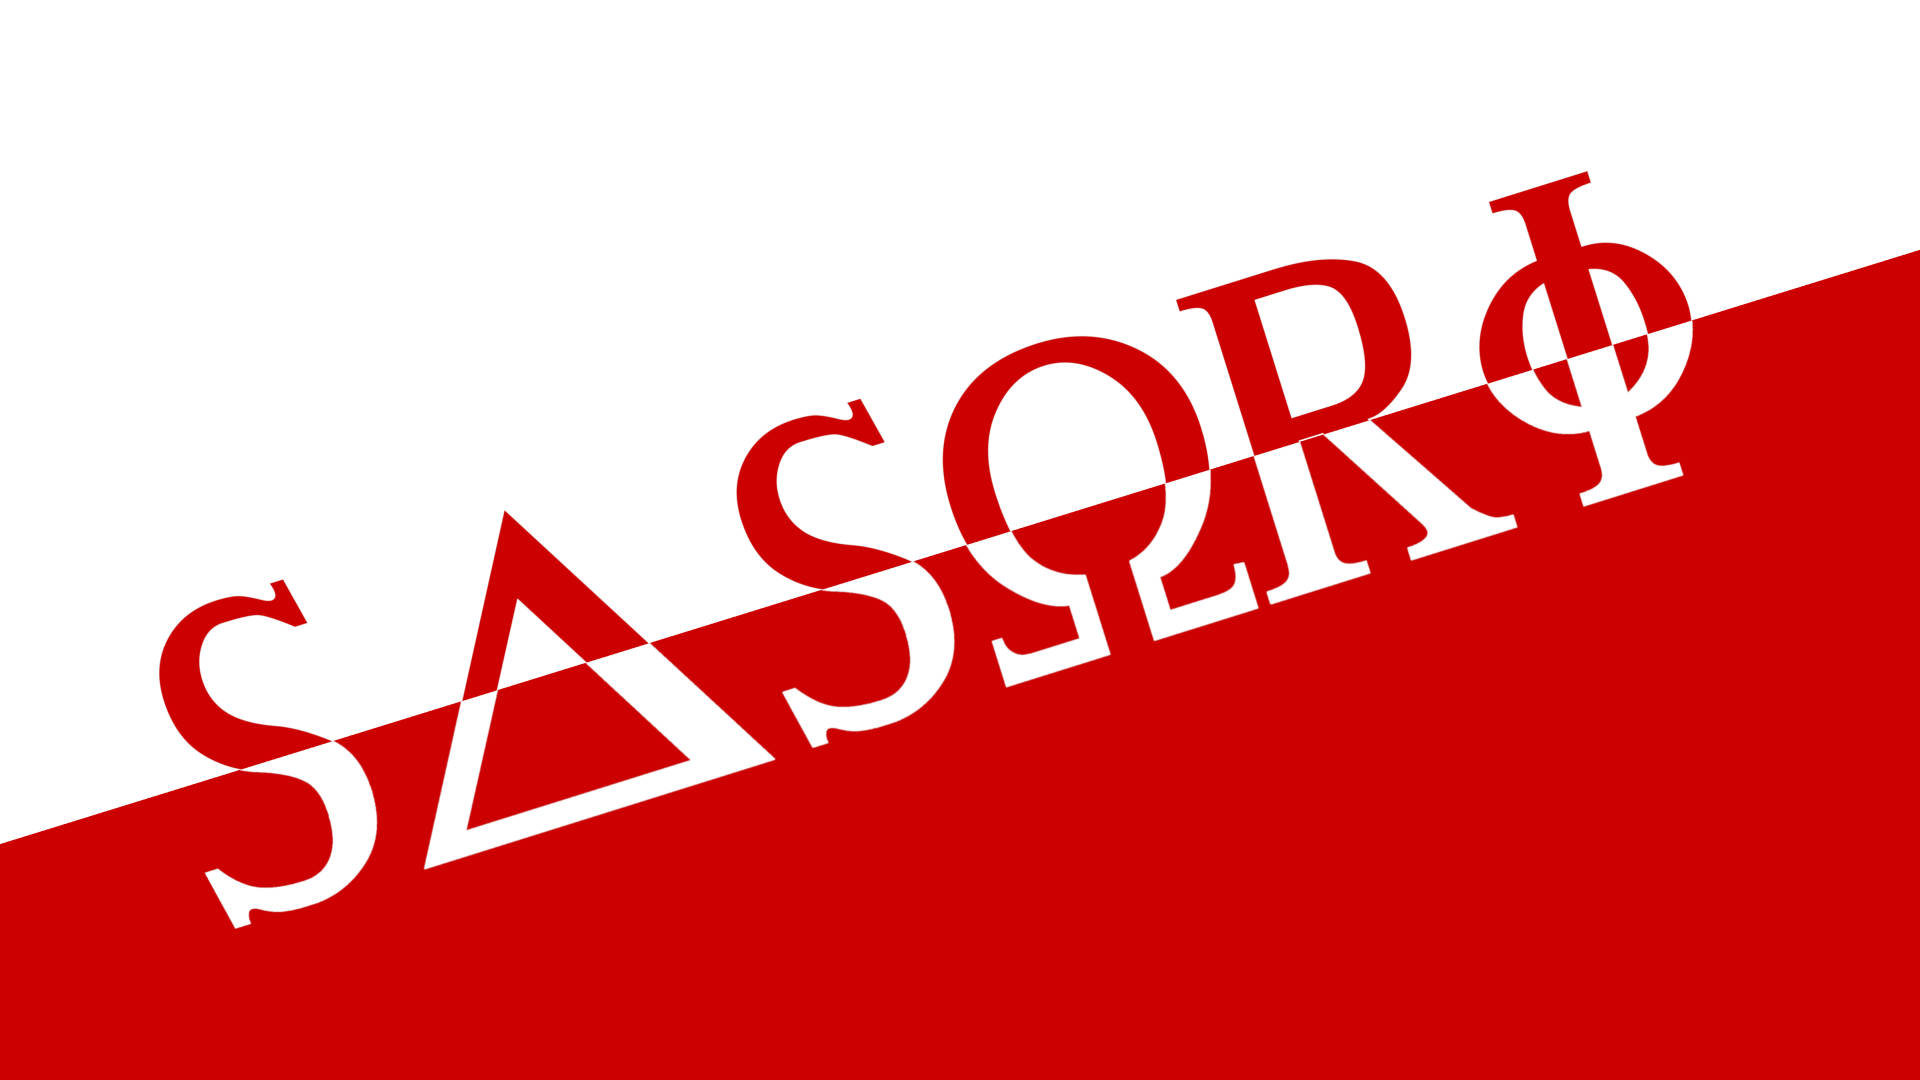 Sasori Name Logo Background